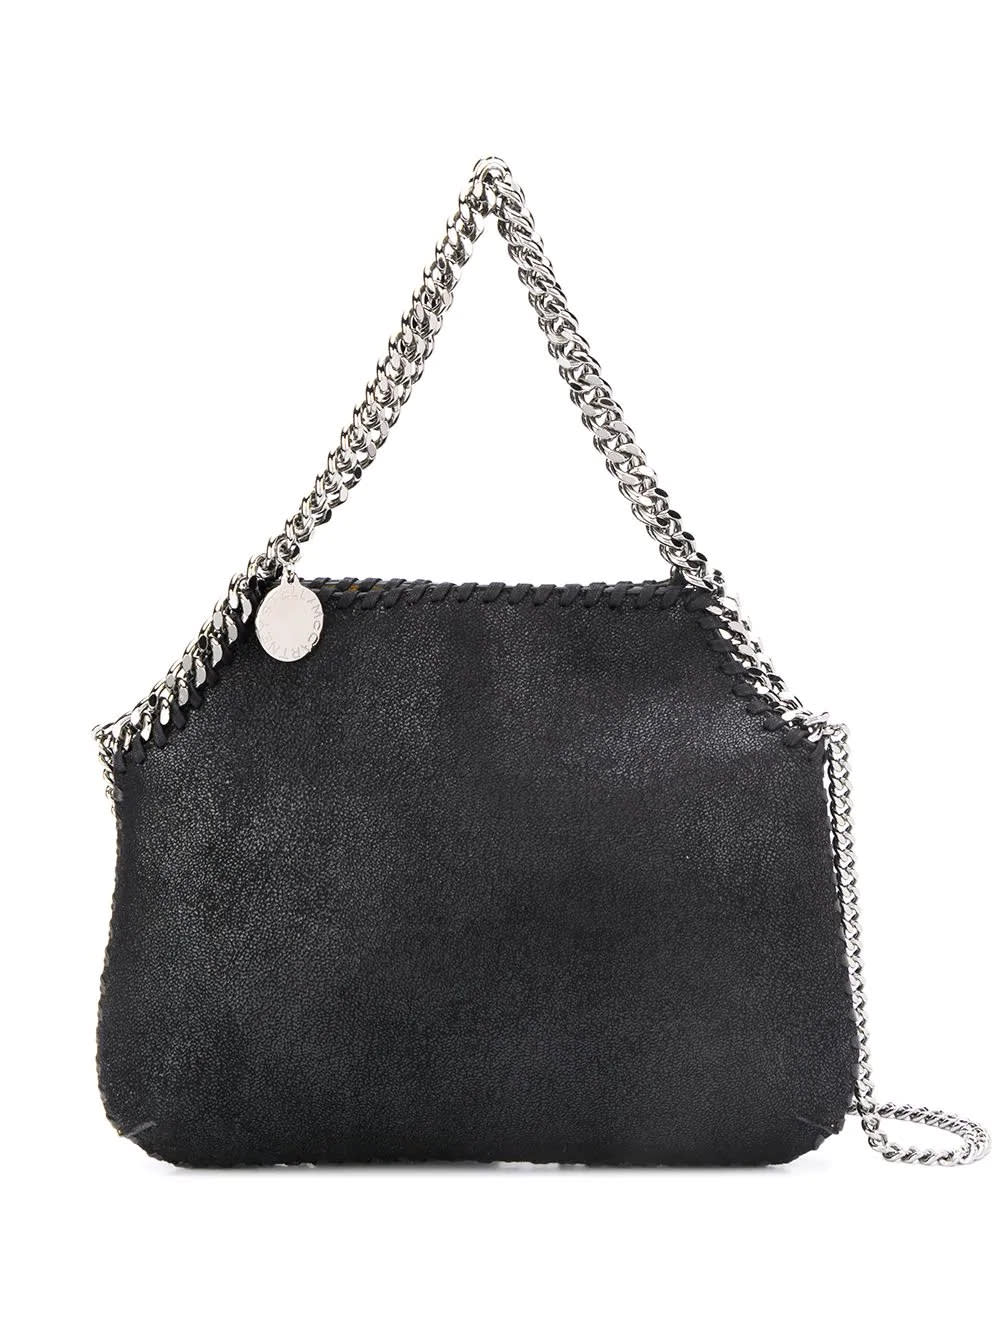 Stella McCartney Black And Silver Falabella Mini Shoulder Bag